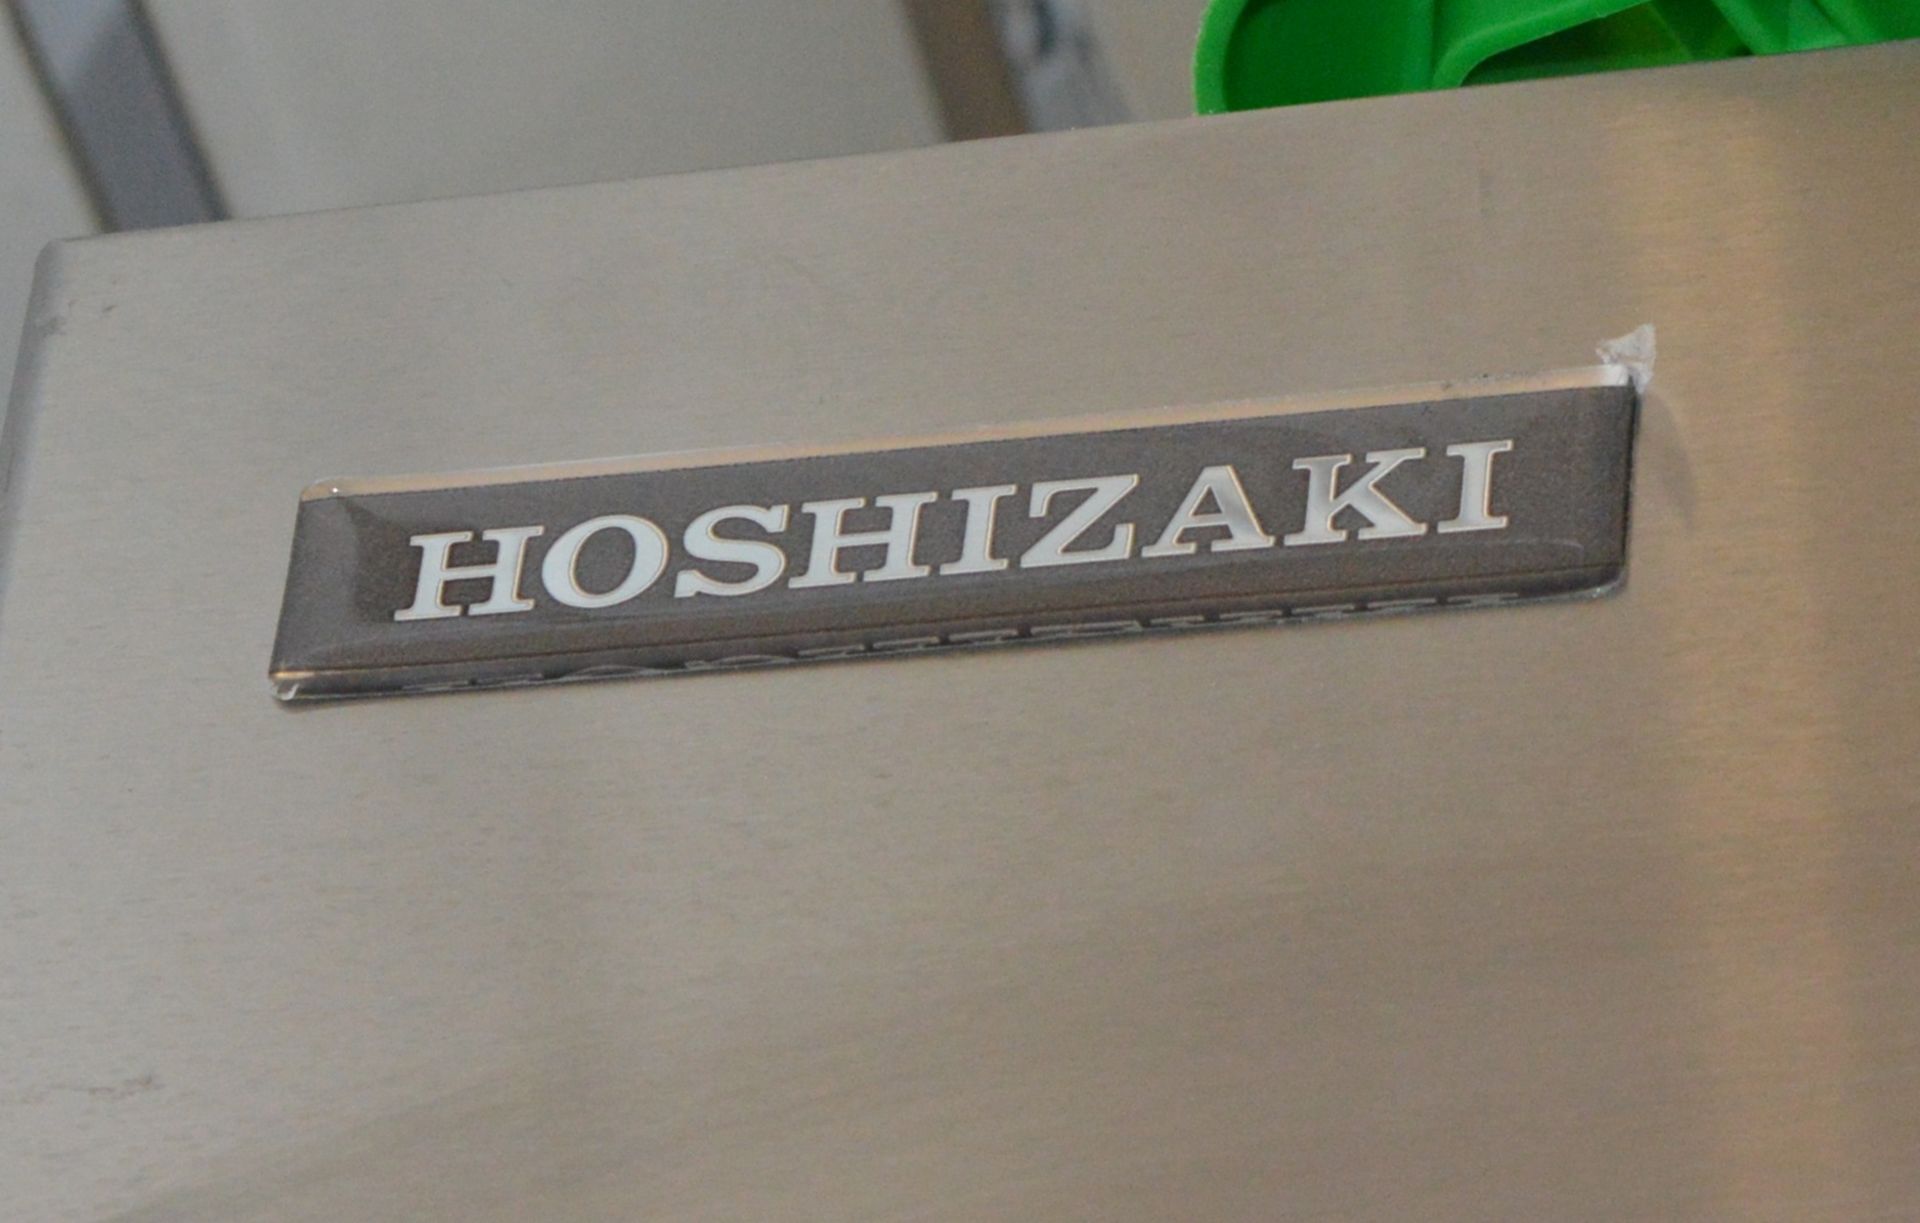 1 x Hoshizaki Air Cool Ice Maker Modular Storage Bin - Impressive 144kg Storage Capacity - - Image 8 of 8